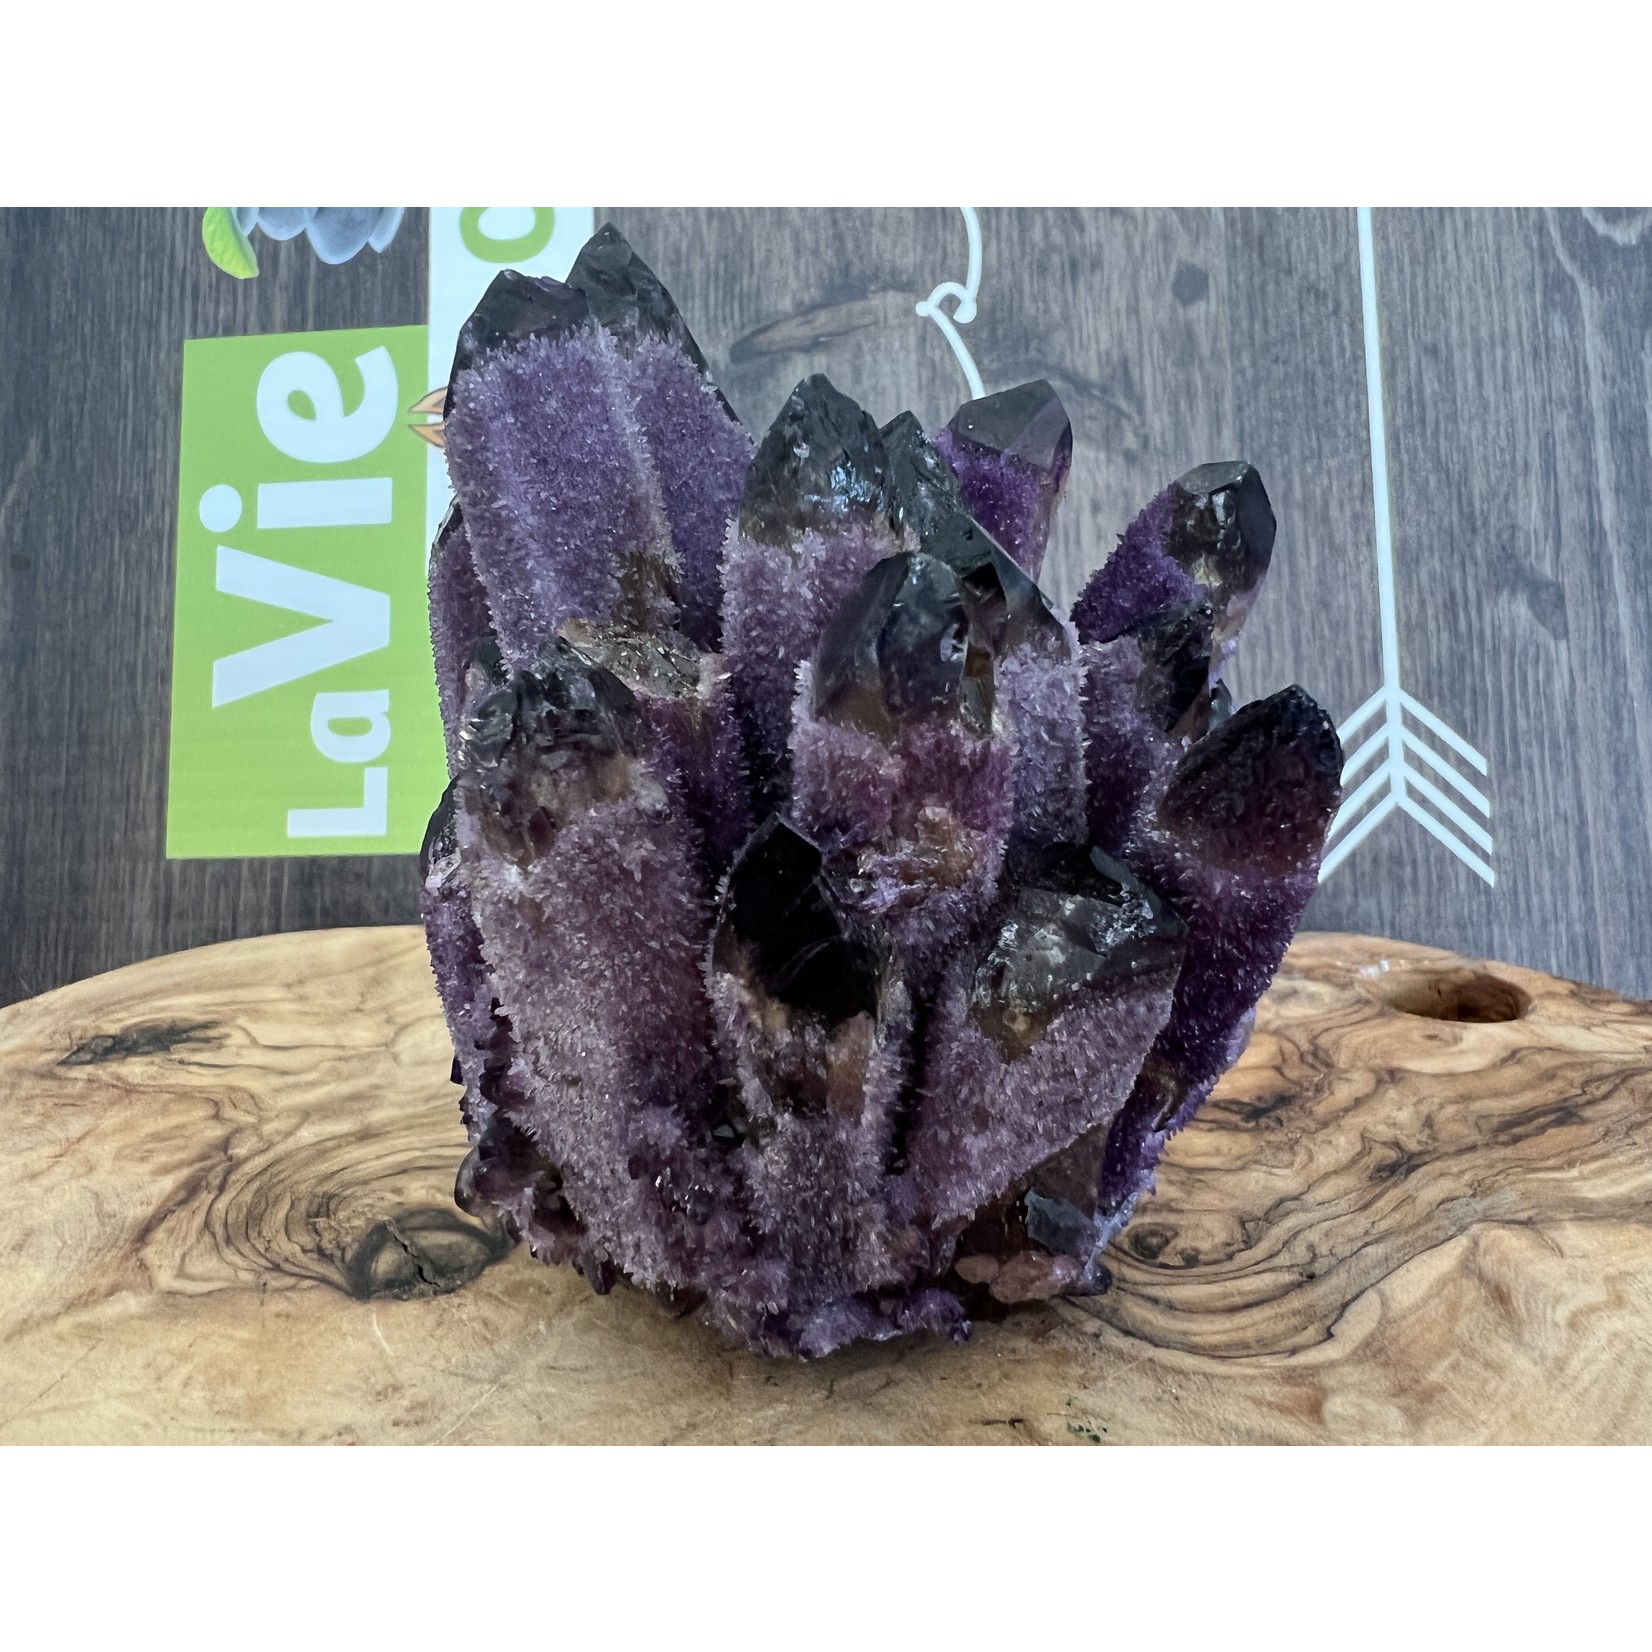 purple phantom quartz cluster, purple quartz, works to cleanse our auric field and environment of negative energies